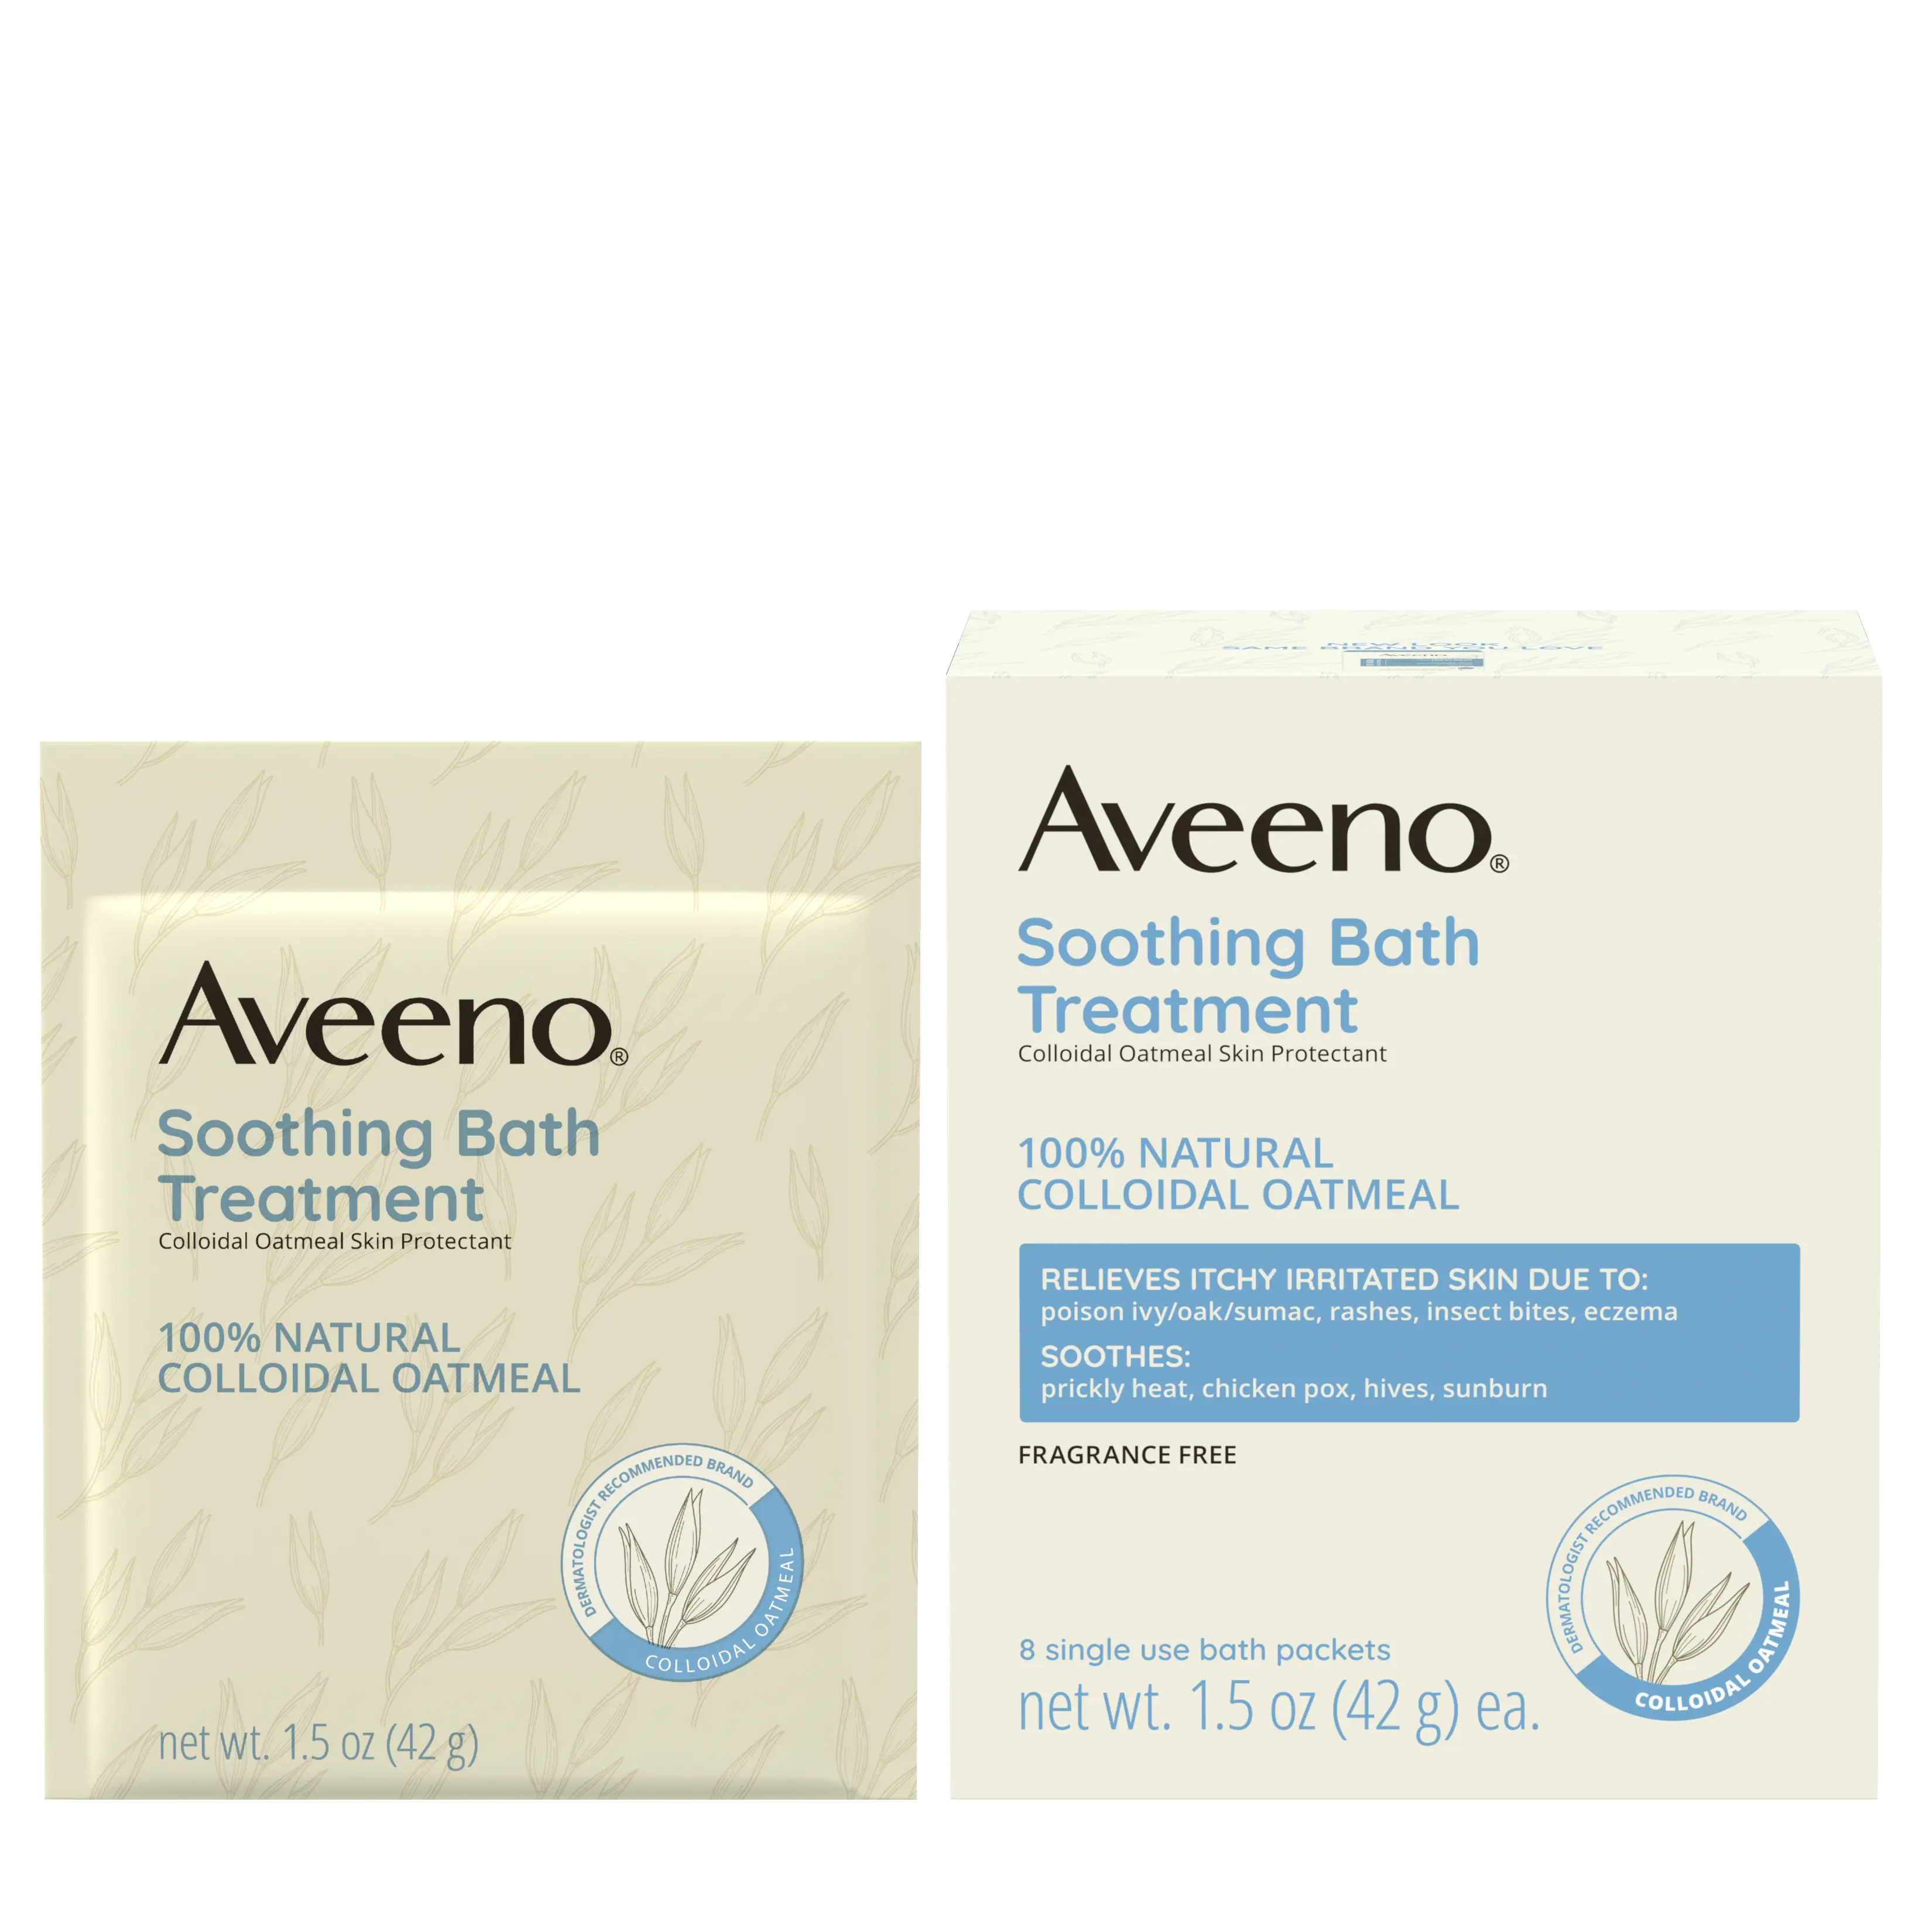 Aveeno Soothing Bath Treatment, Colloidal Oatmeal Skin Protectant